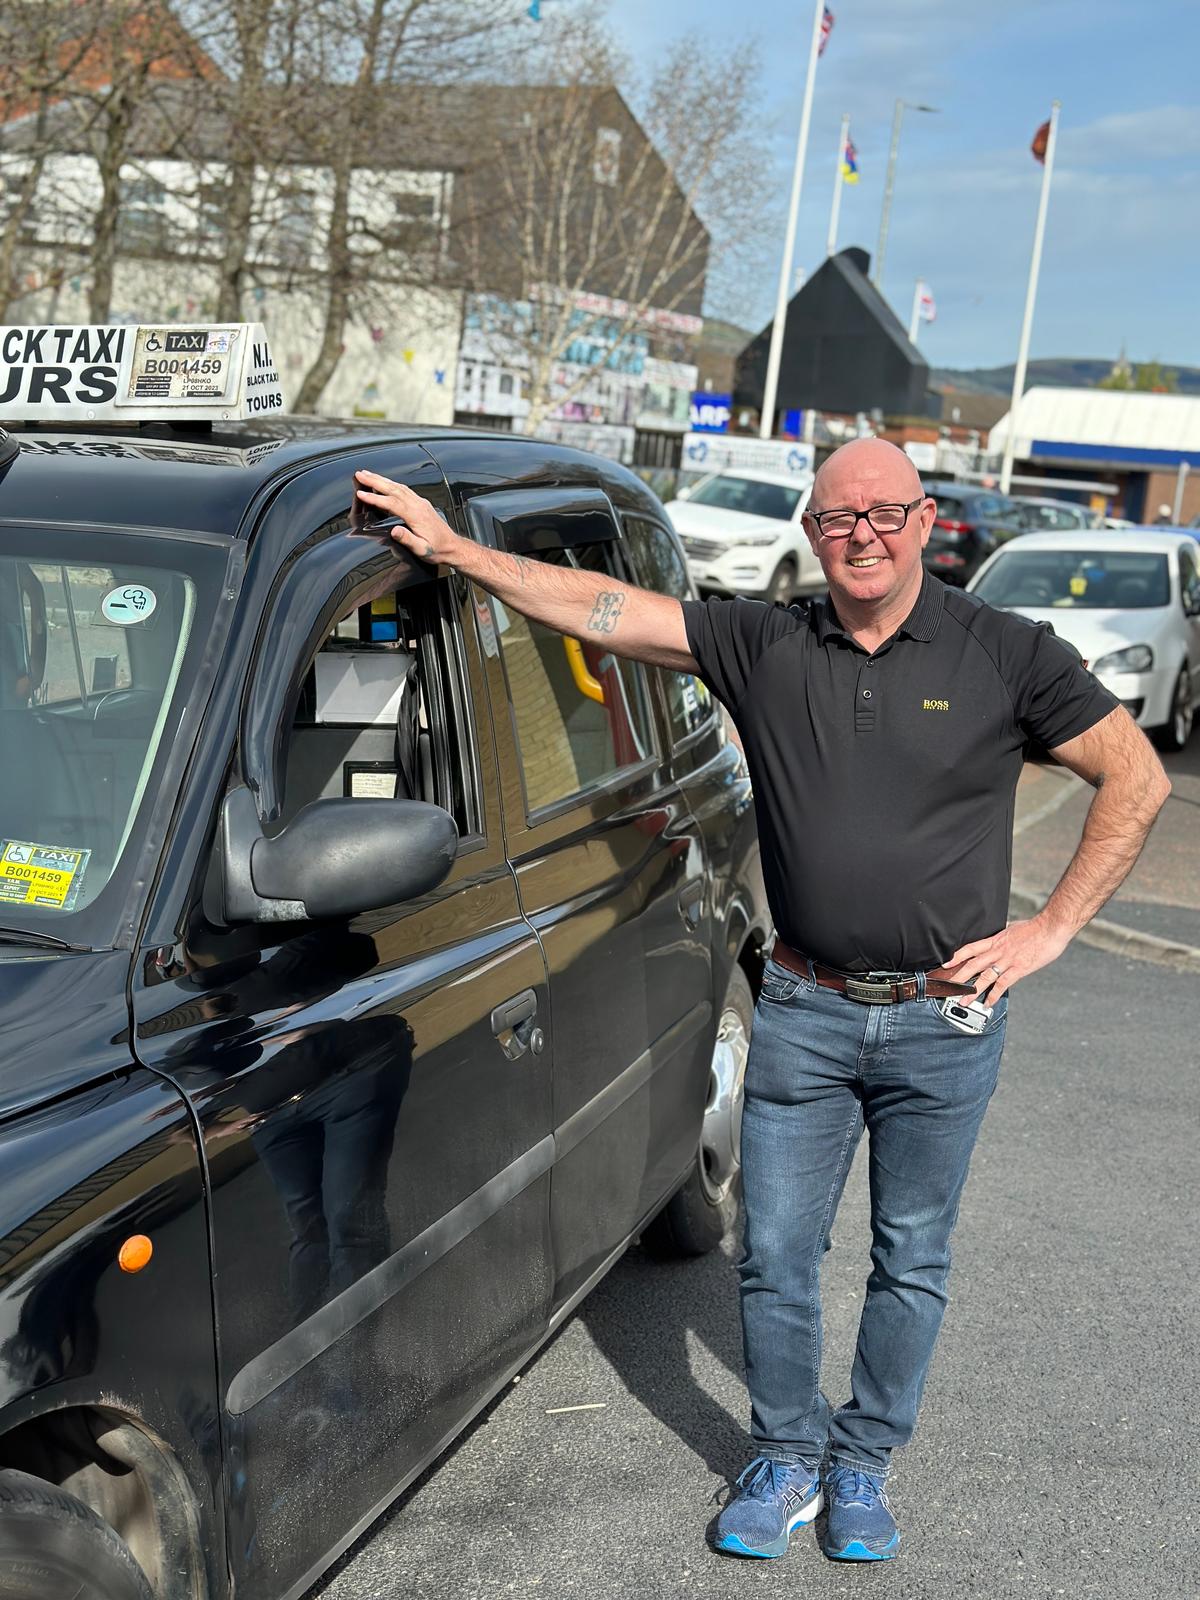 Mark Neil of NI Black Taxi Tours. (Tim Johnson)